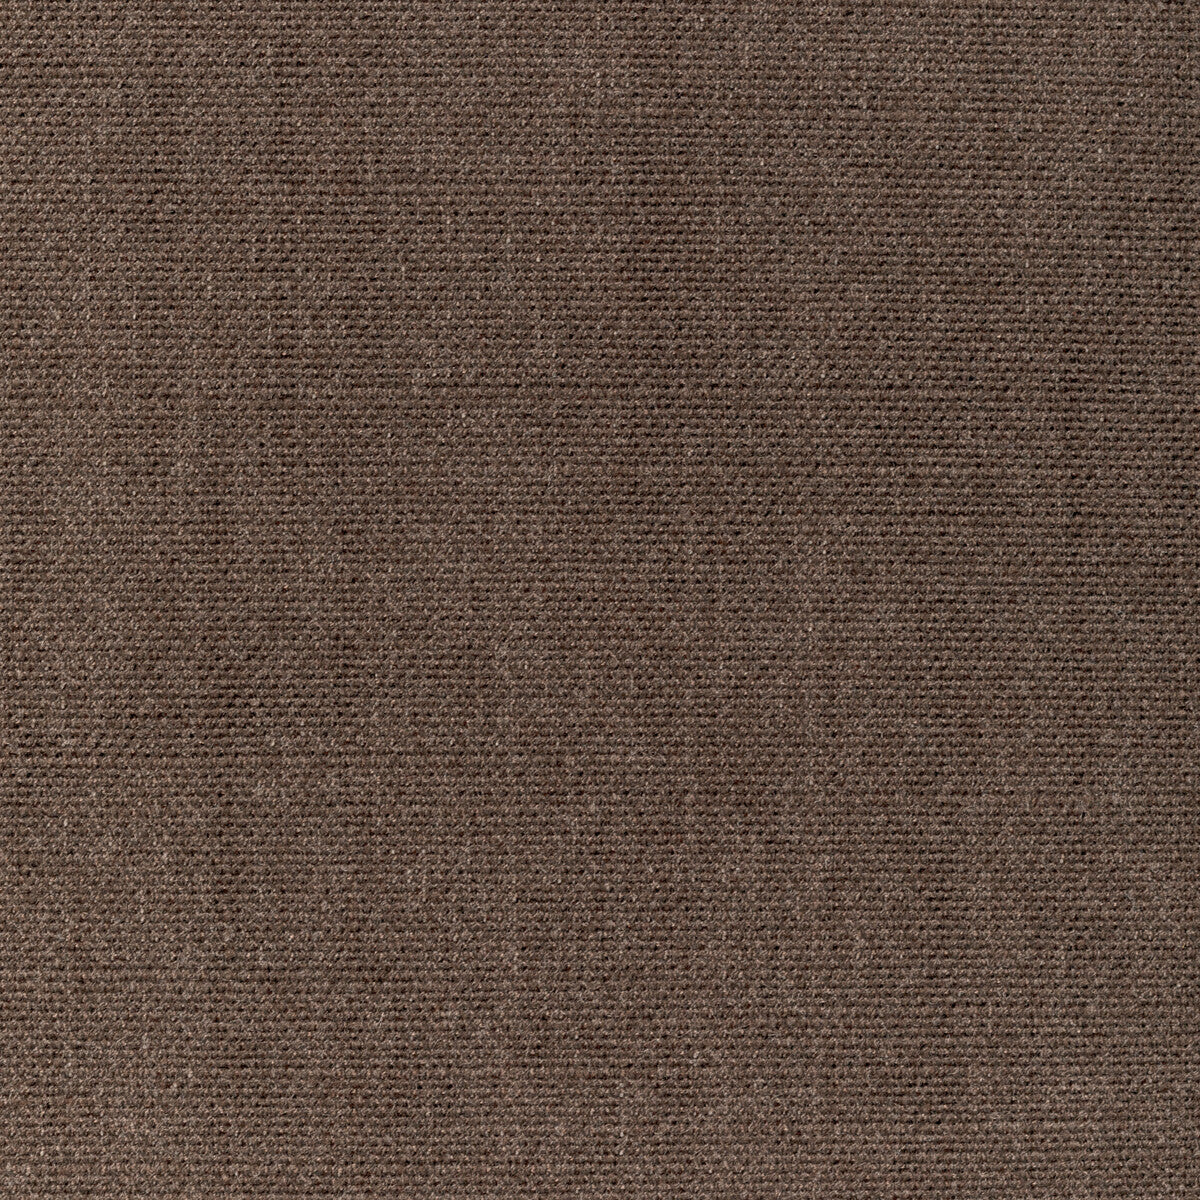 Kravet Smart fabric in 36112-66 color - pattern 36112.66.0 - by Kravet Smart in the Performance Kravetarmor collection